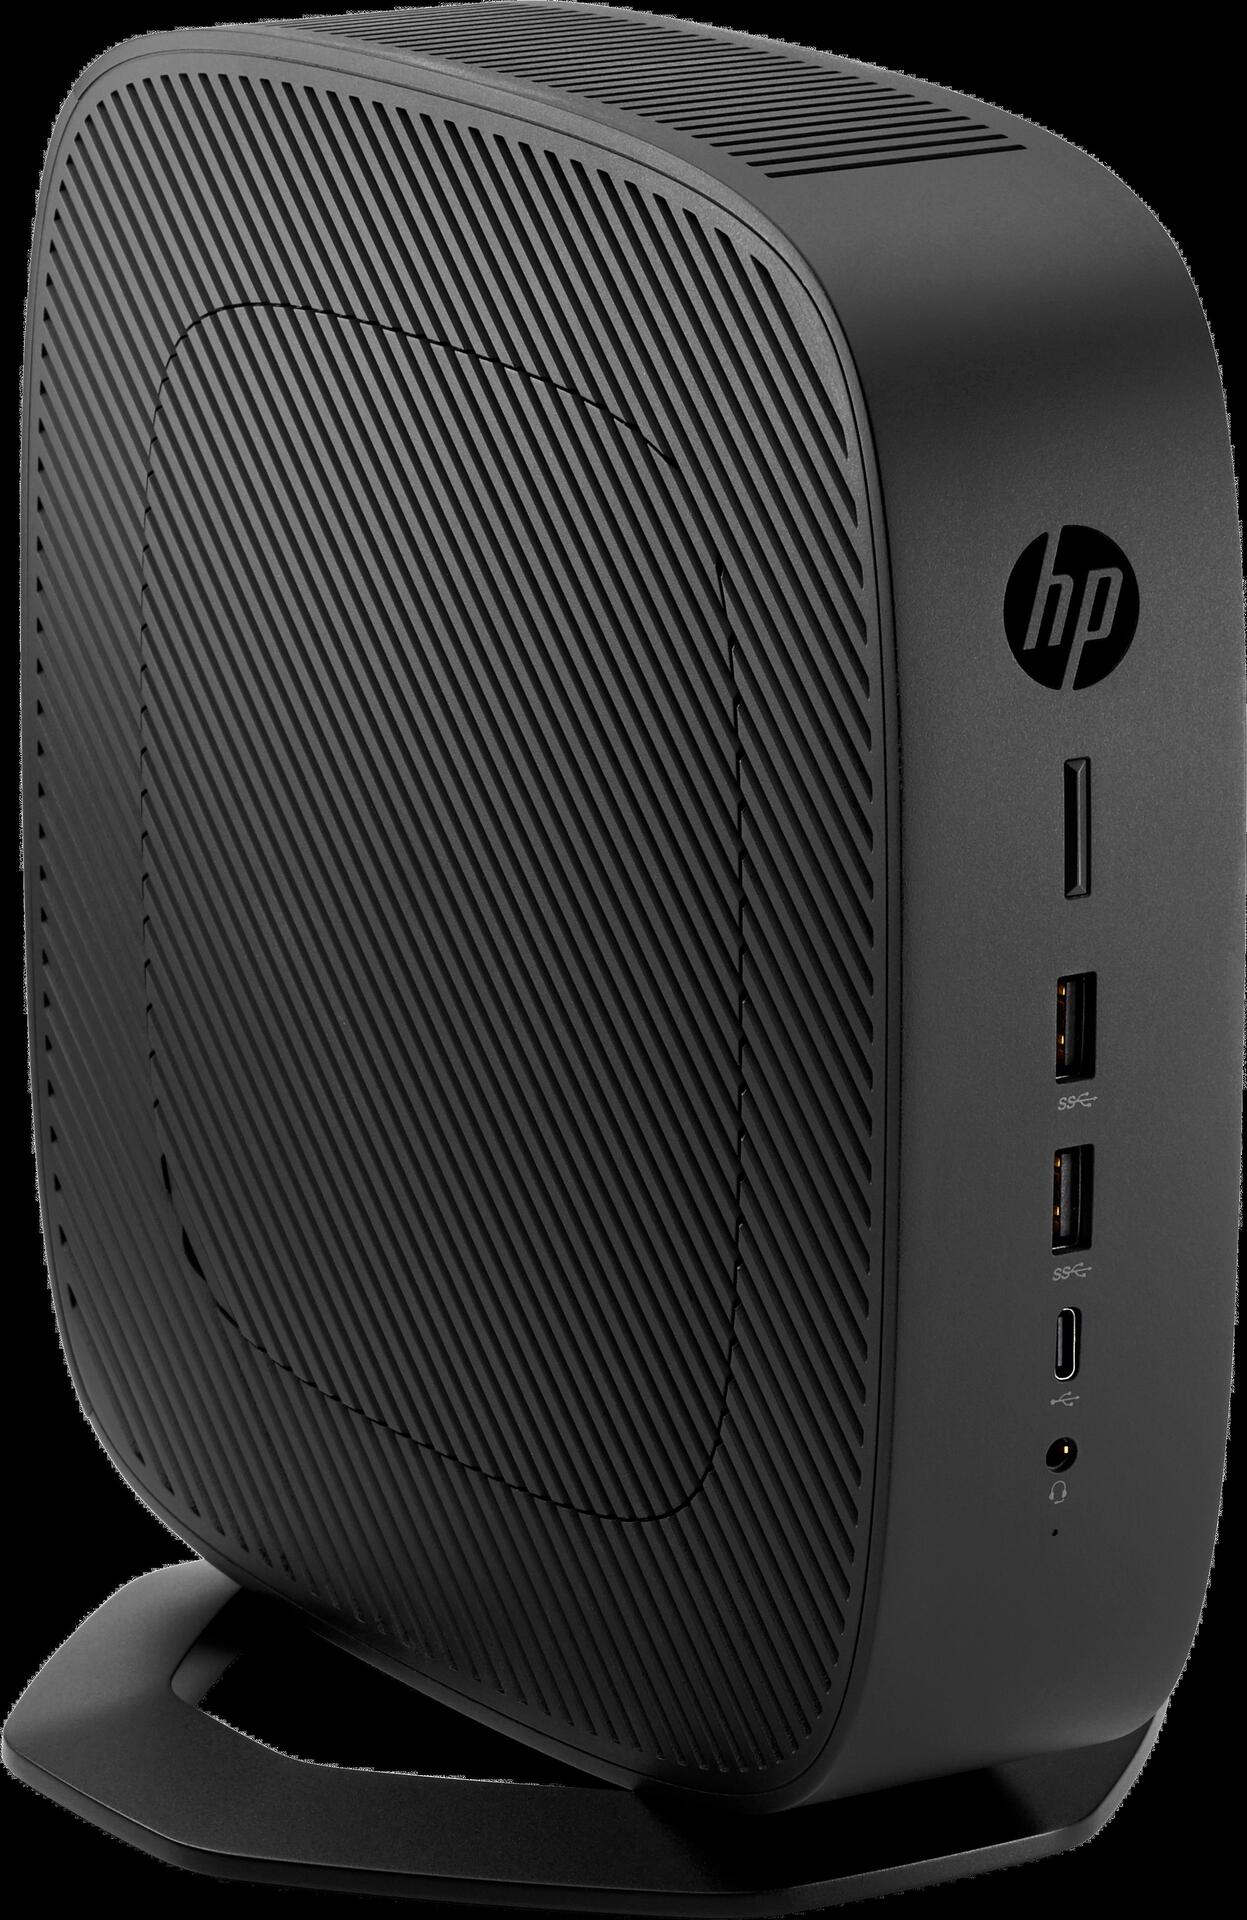 HP t740 Thin Client (6TV51EA#ABD)